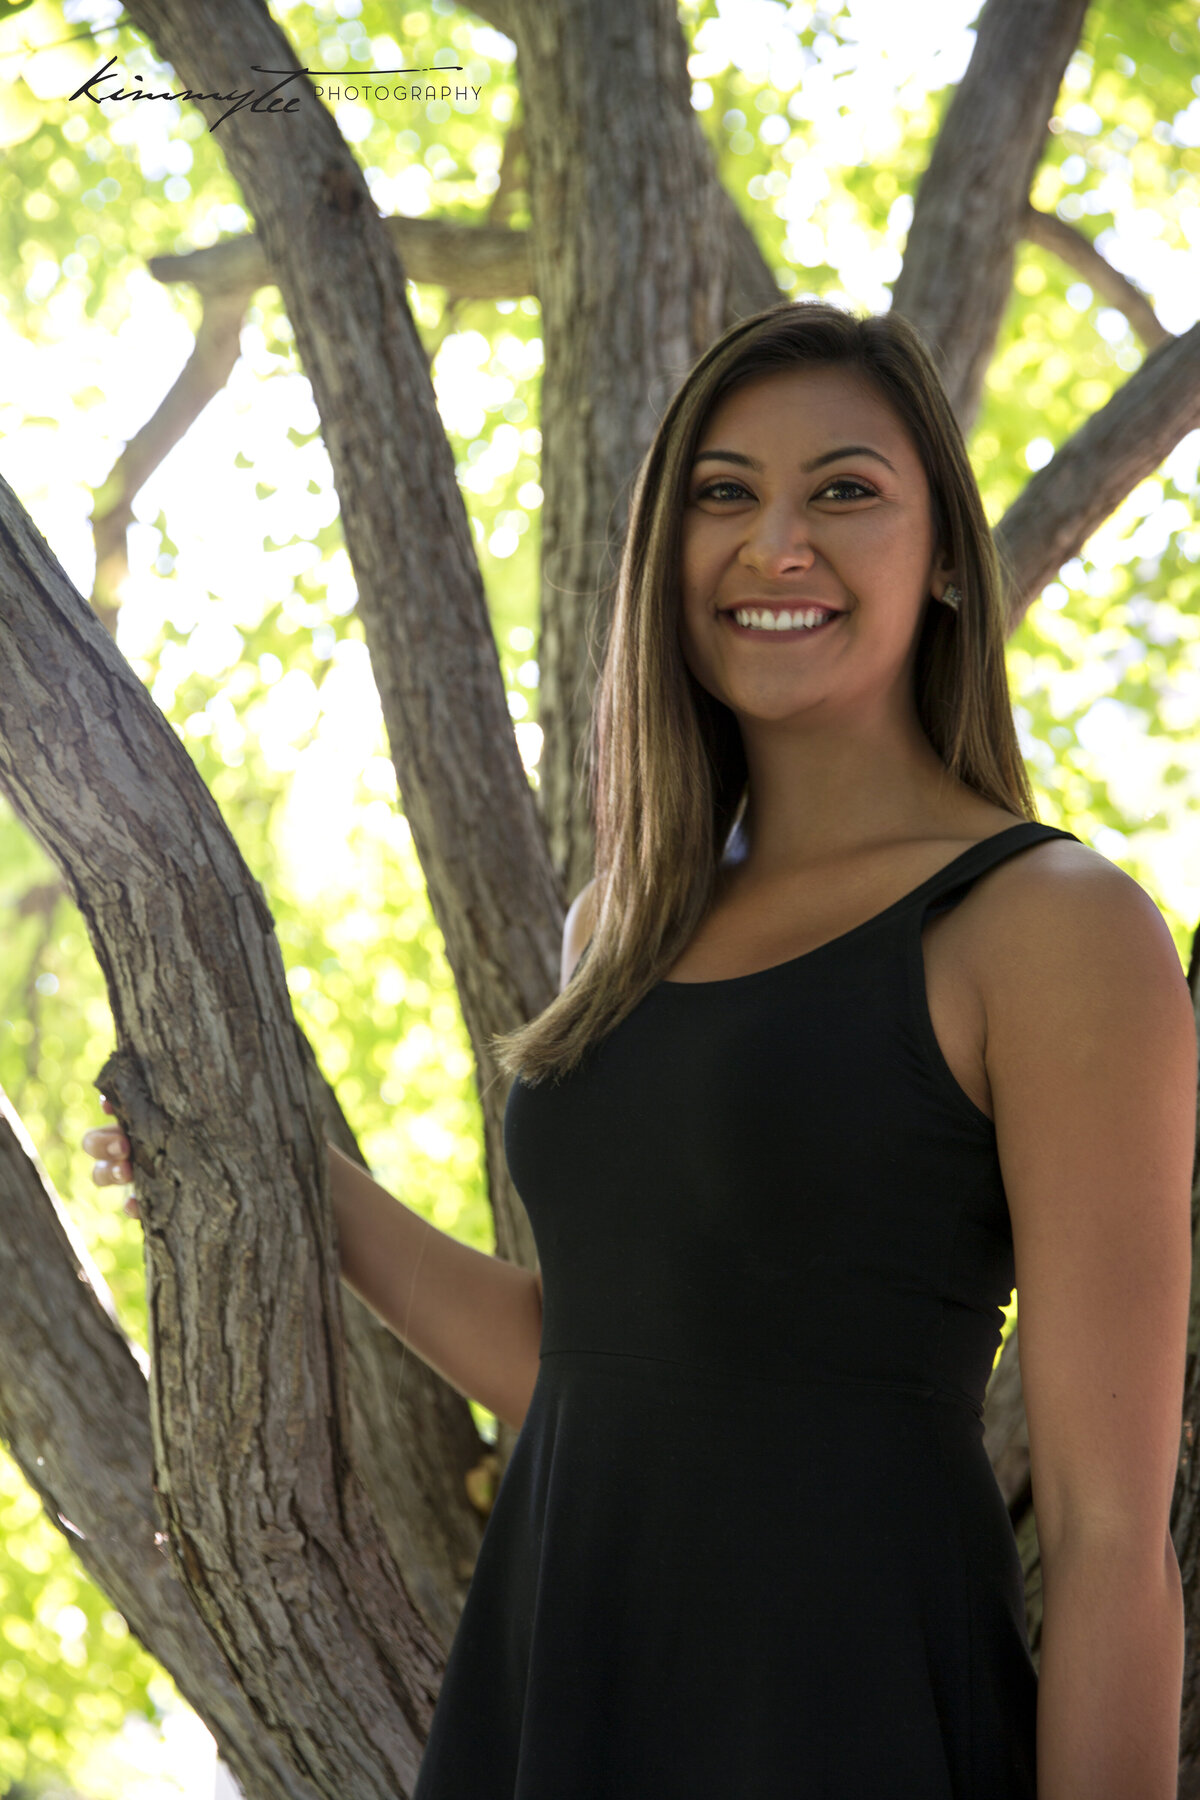 Smiling girl in black dress holding onto tree